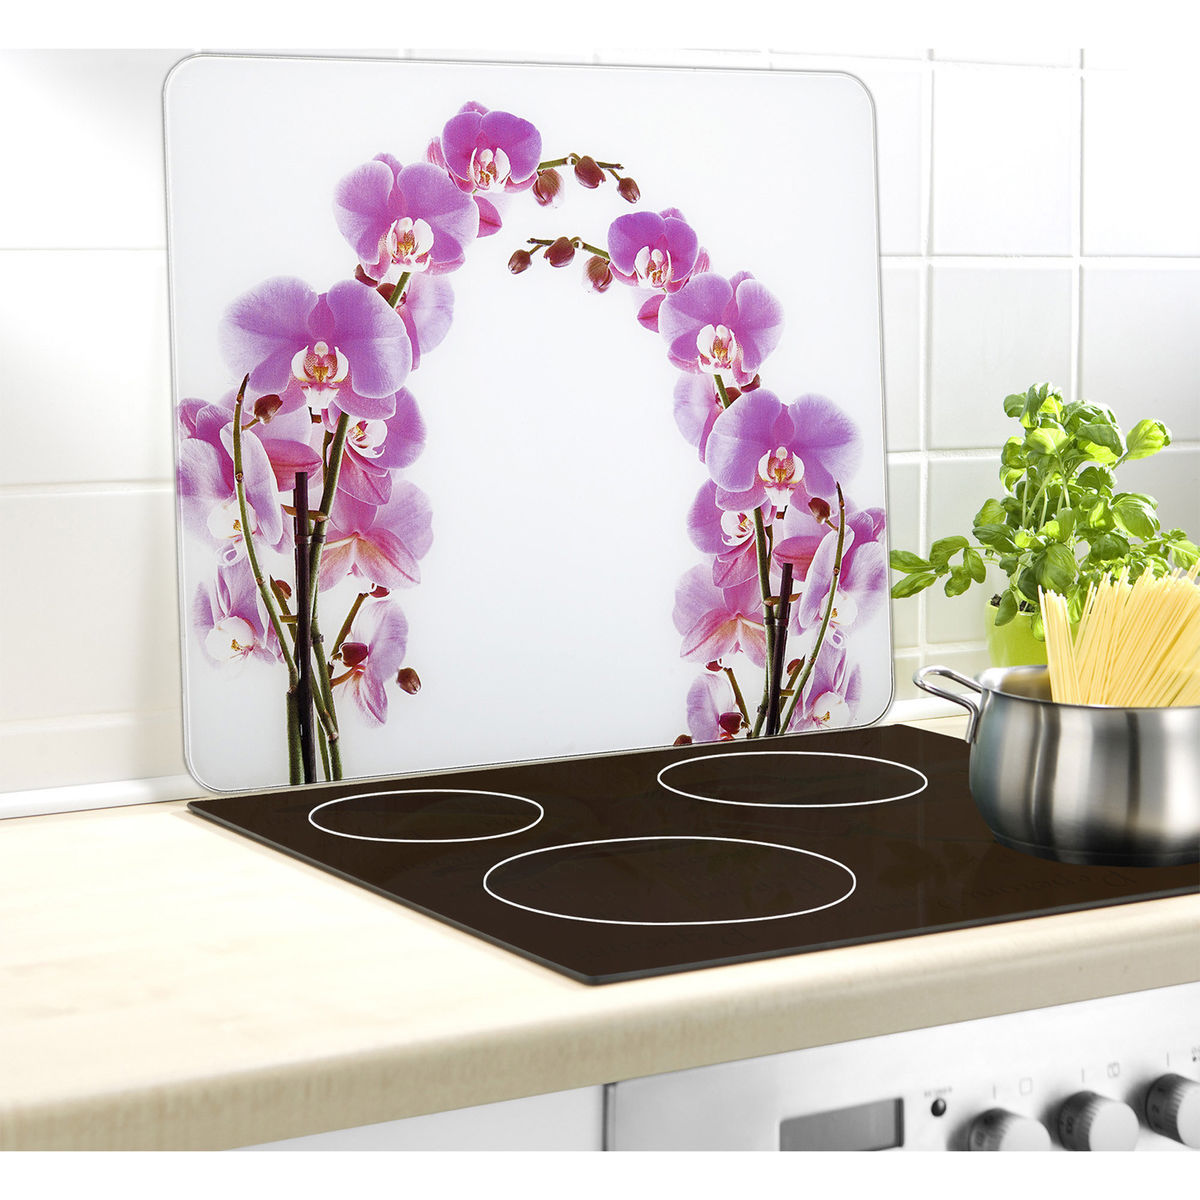 Wenko Couvre-plaque - Fleur d'orchidee